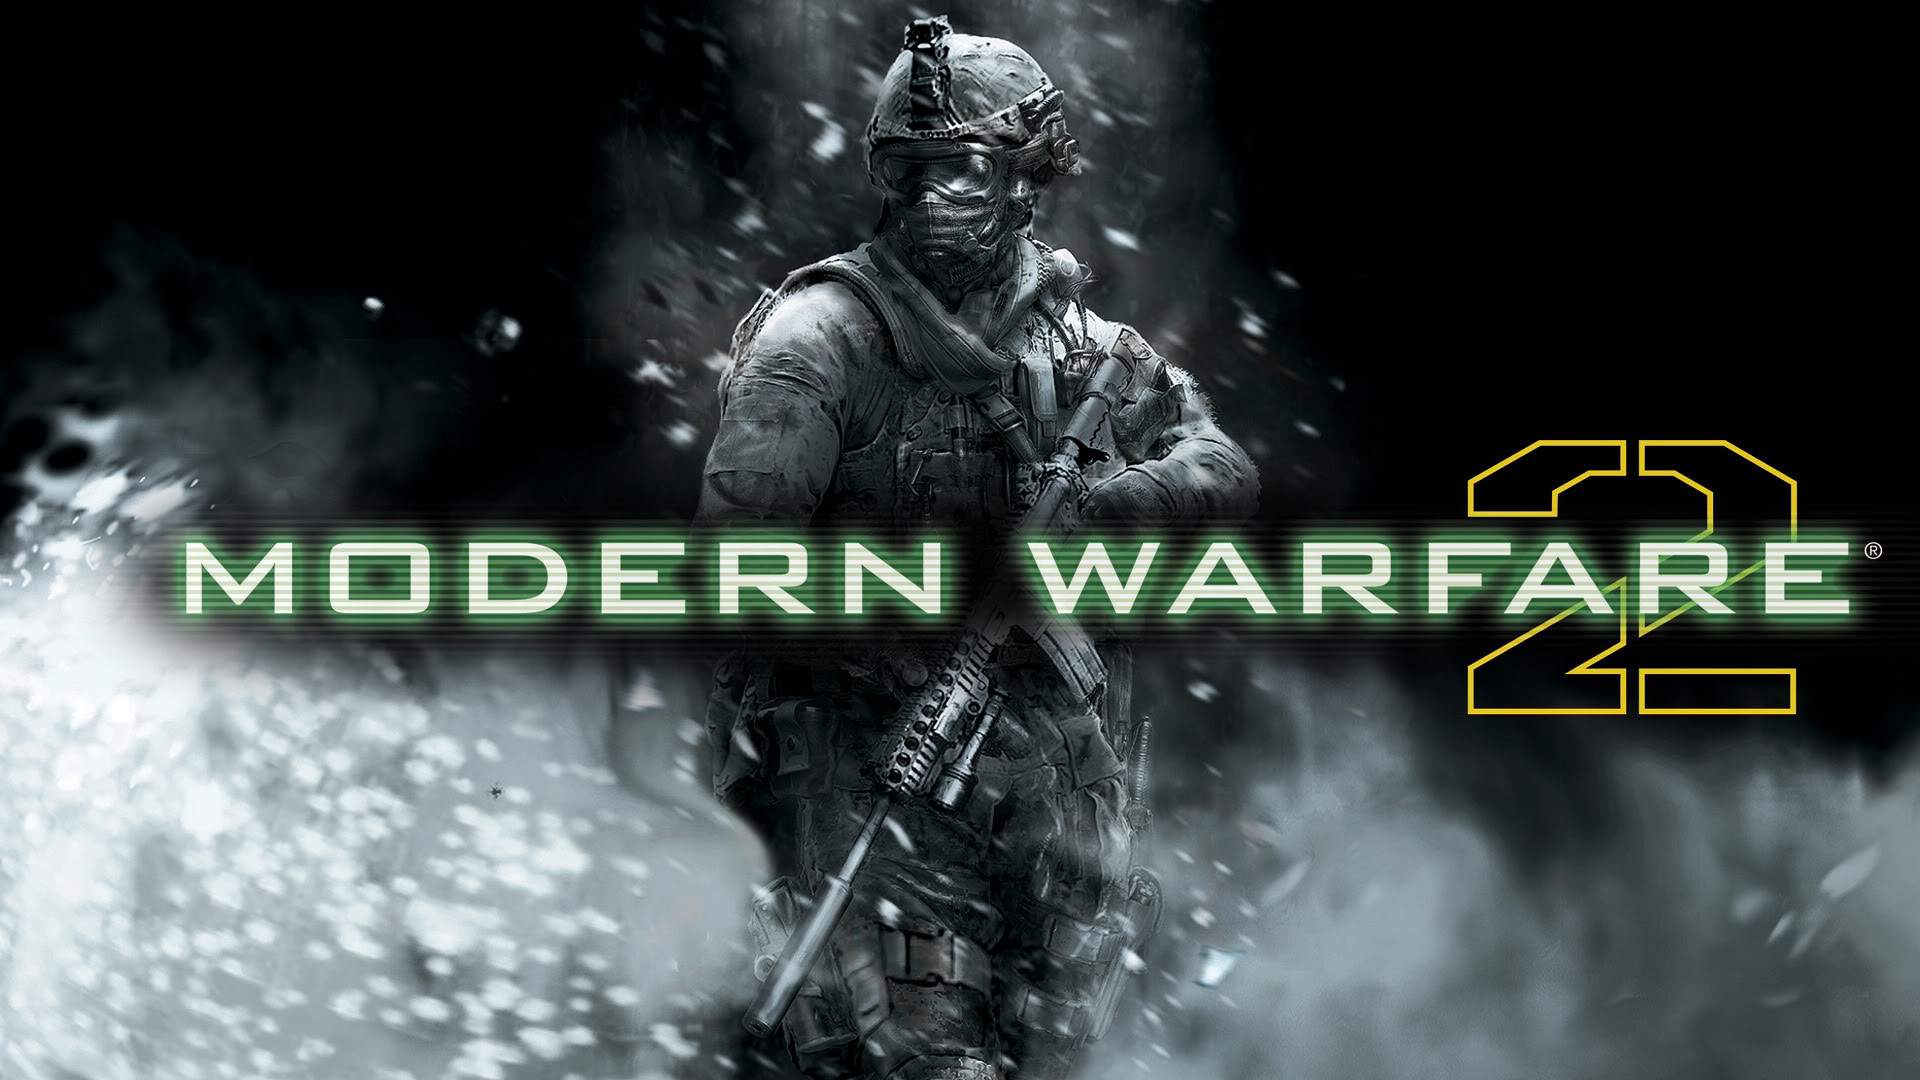 How To Play Call Of Duty Modern Warfare Co Op Offline Via Lan